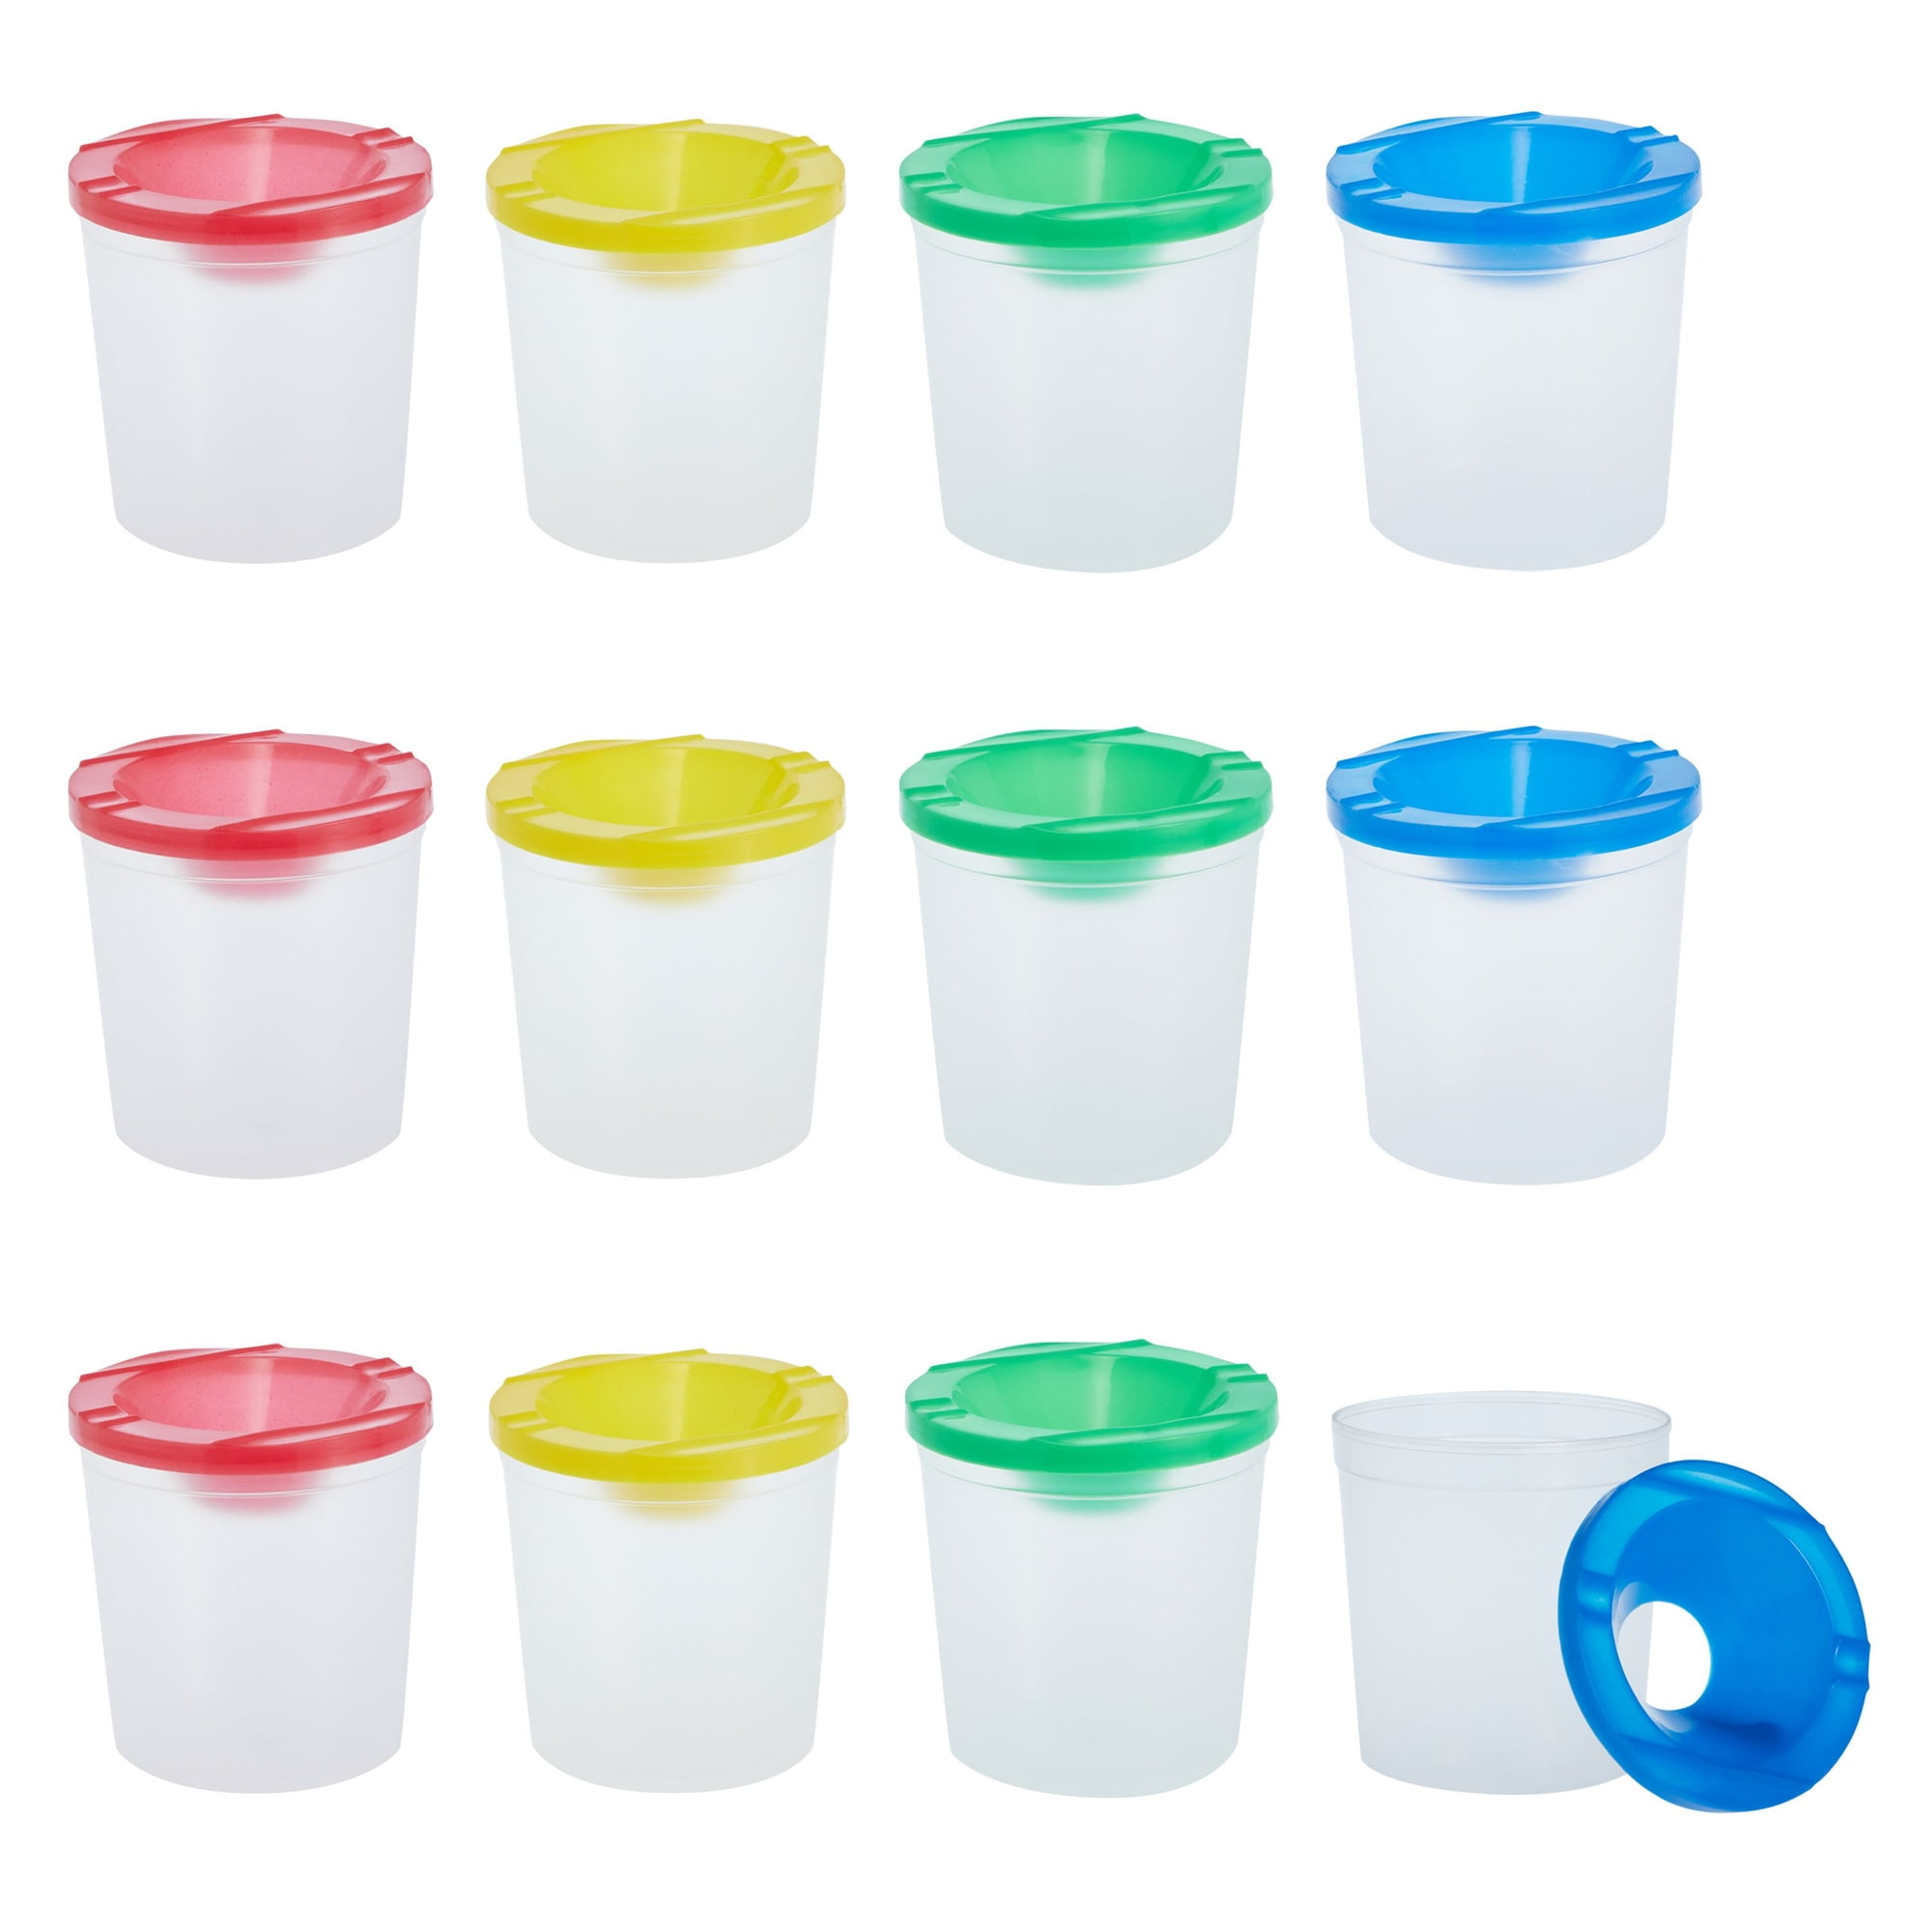  RNKP 10 Pieces Kids Anti-Spill Paint Cups, Kids Paint